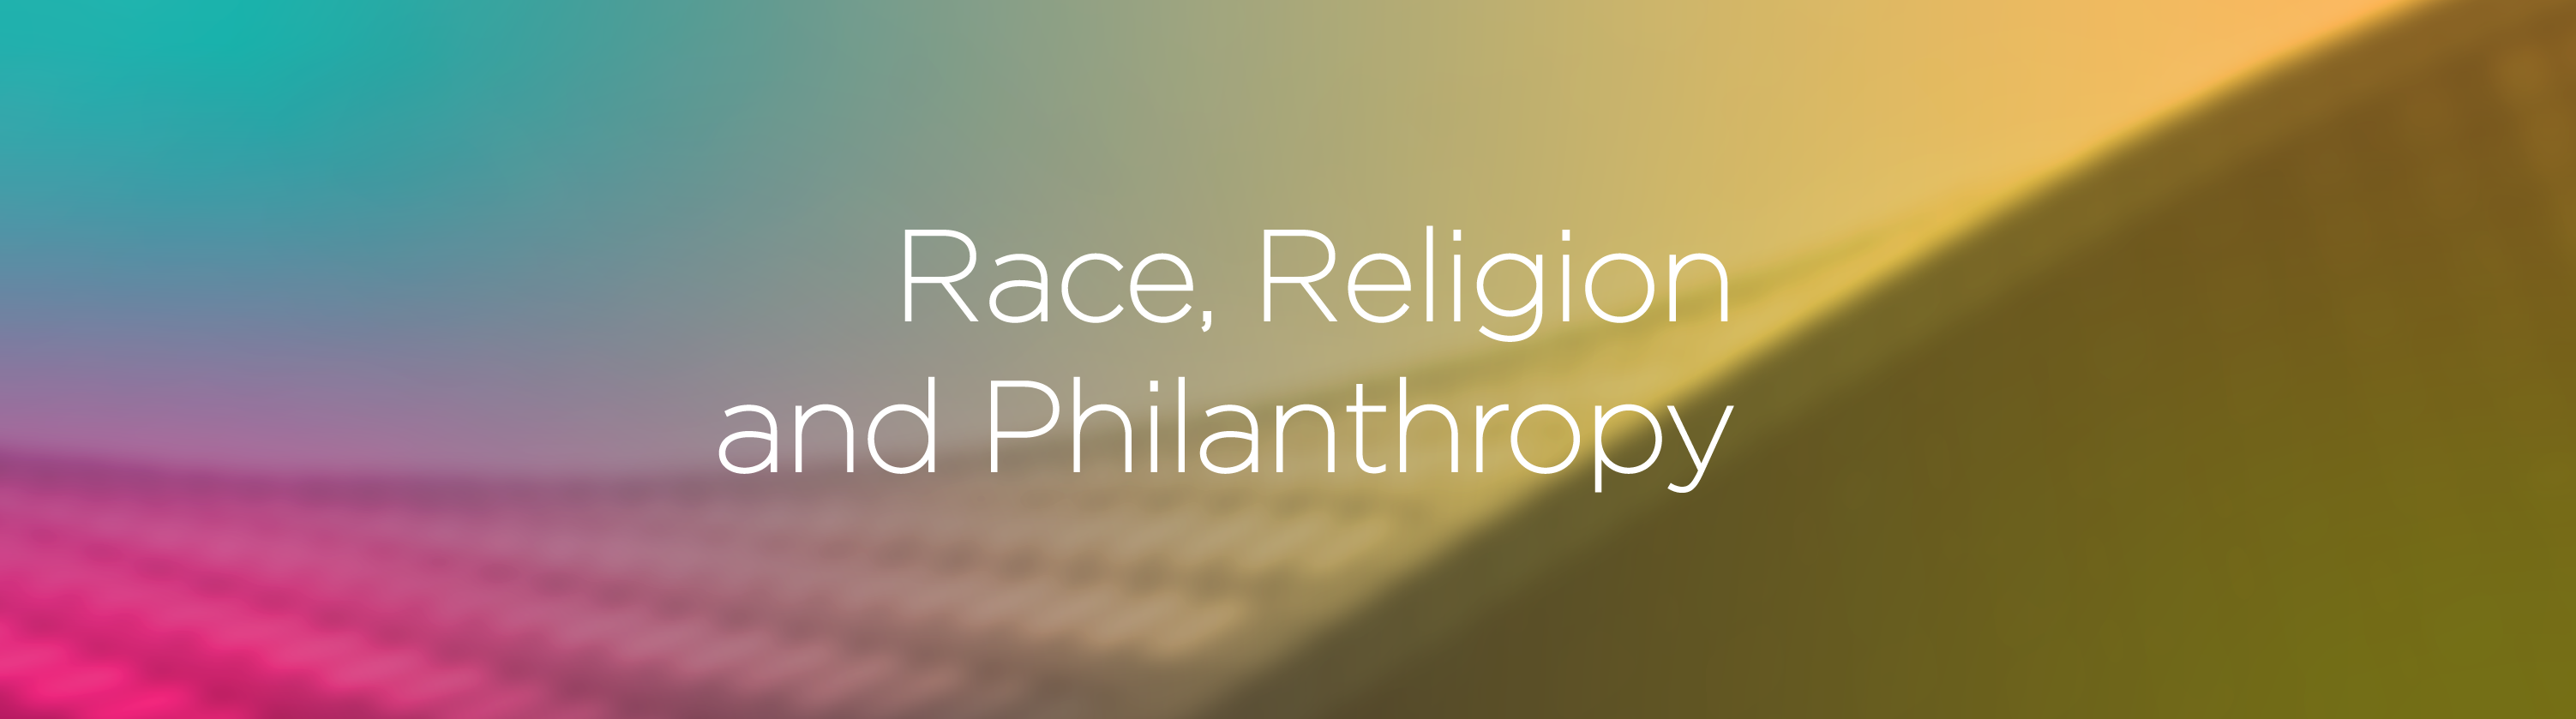 Race, Religion, Philanthropy Webinar